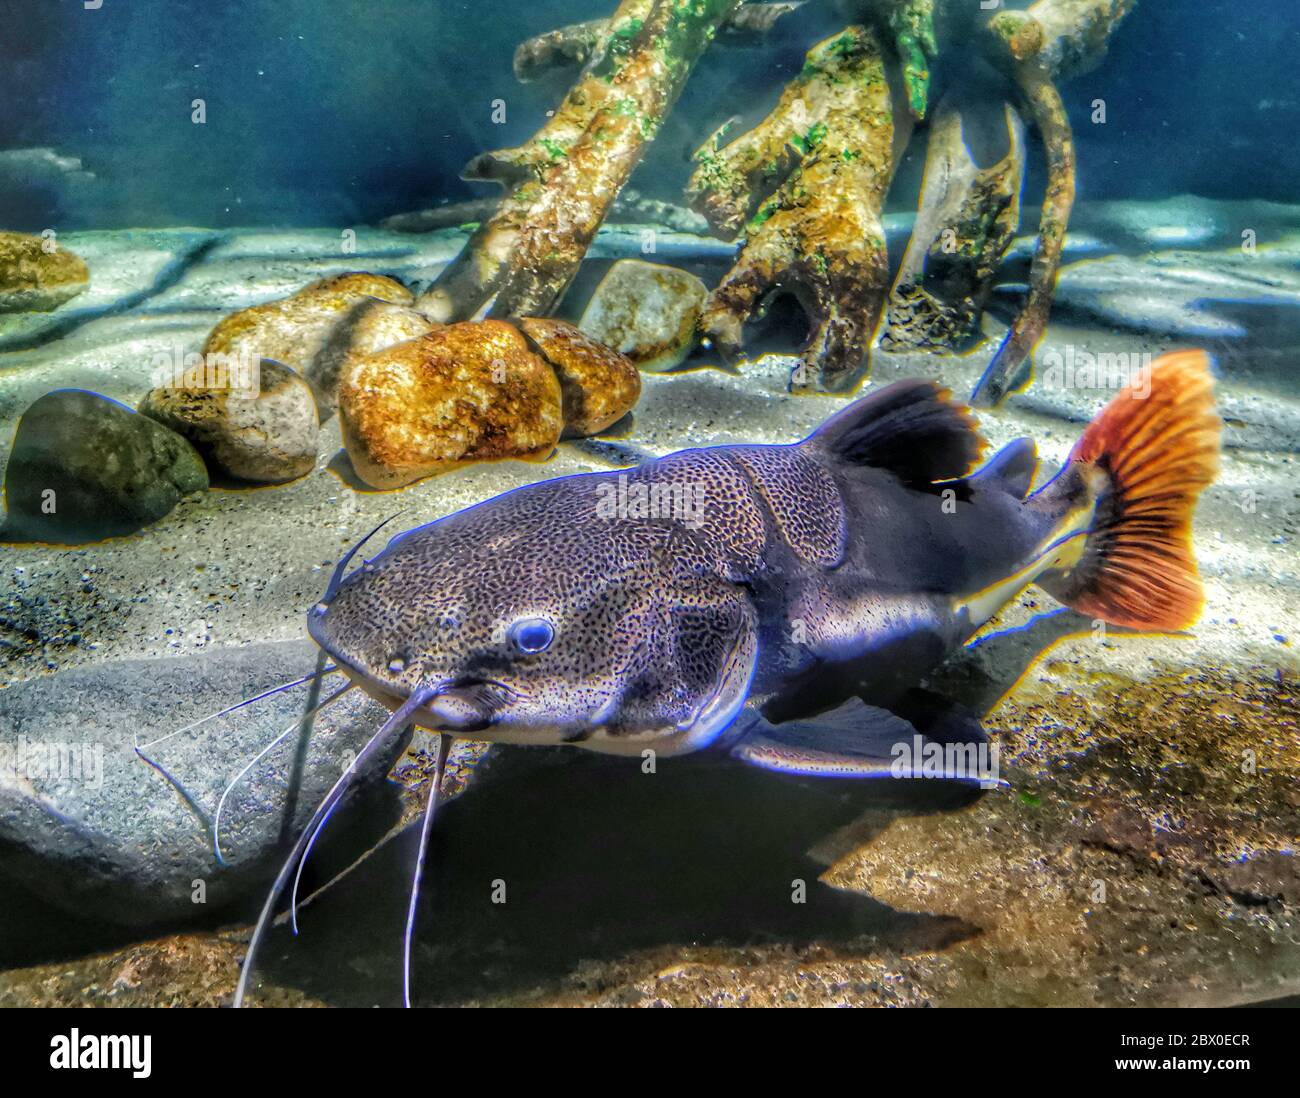 Small catfish shark in aquarium Stock Photo